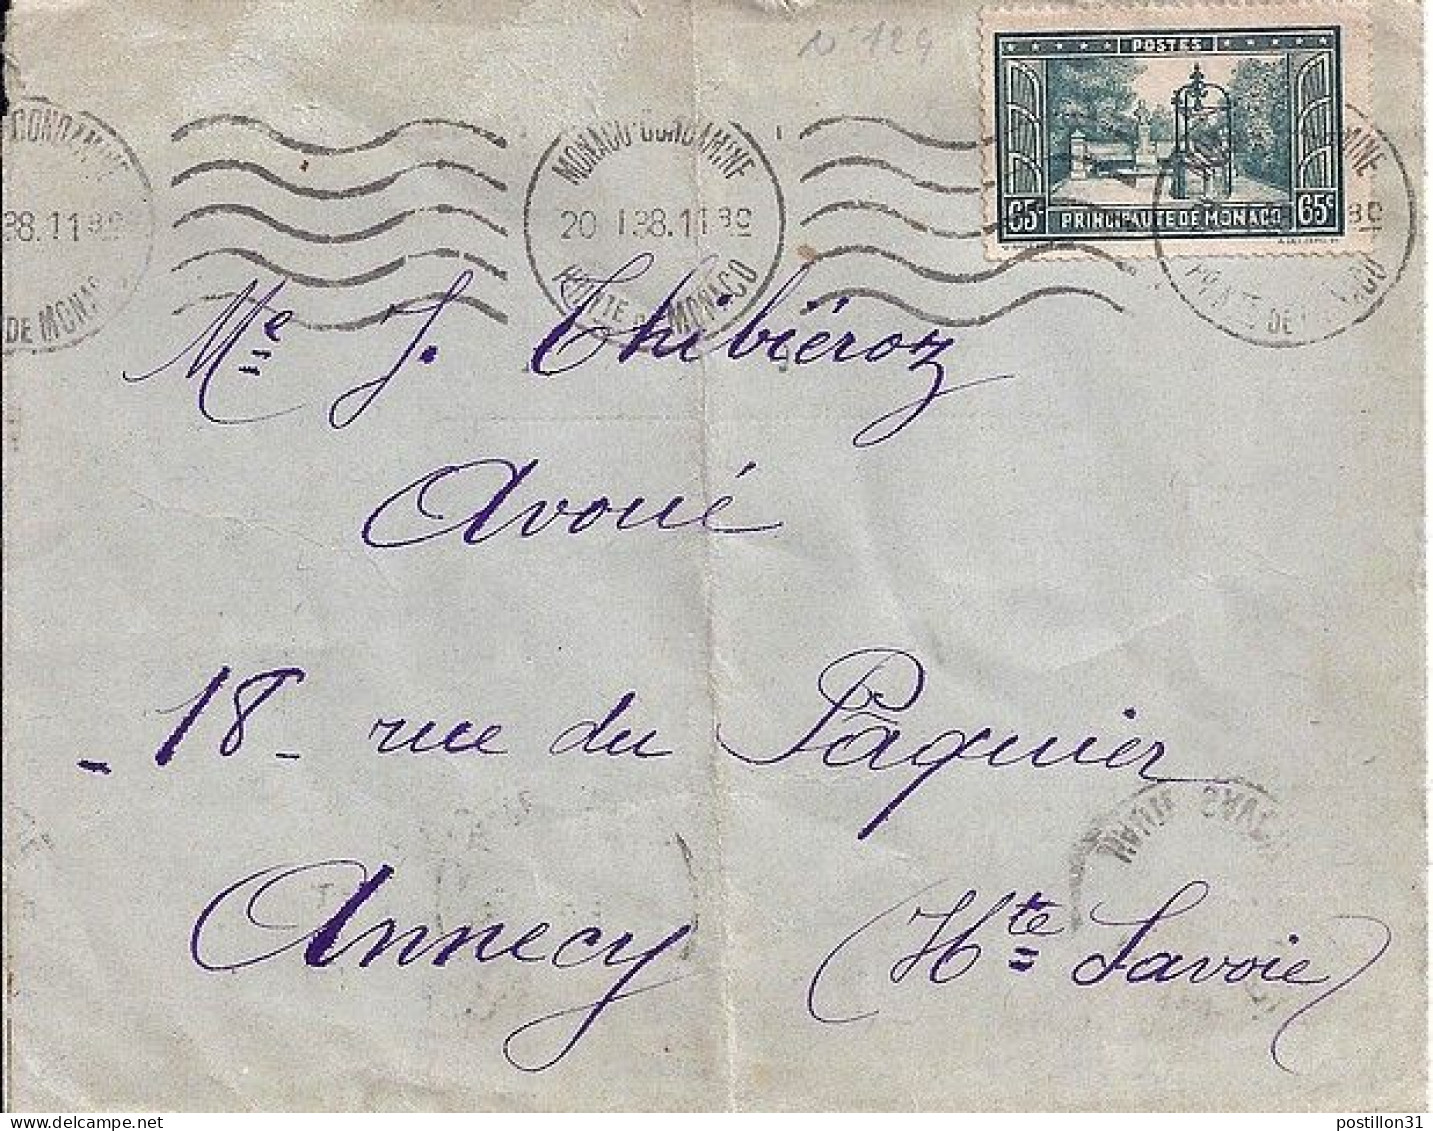 MONACO N° 124 S/L. DE MONTE CARLO/7.11.38 POUR FRANCE - Briefe U. Dokumente